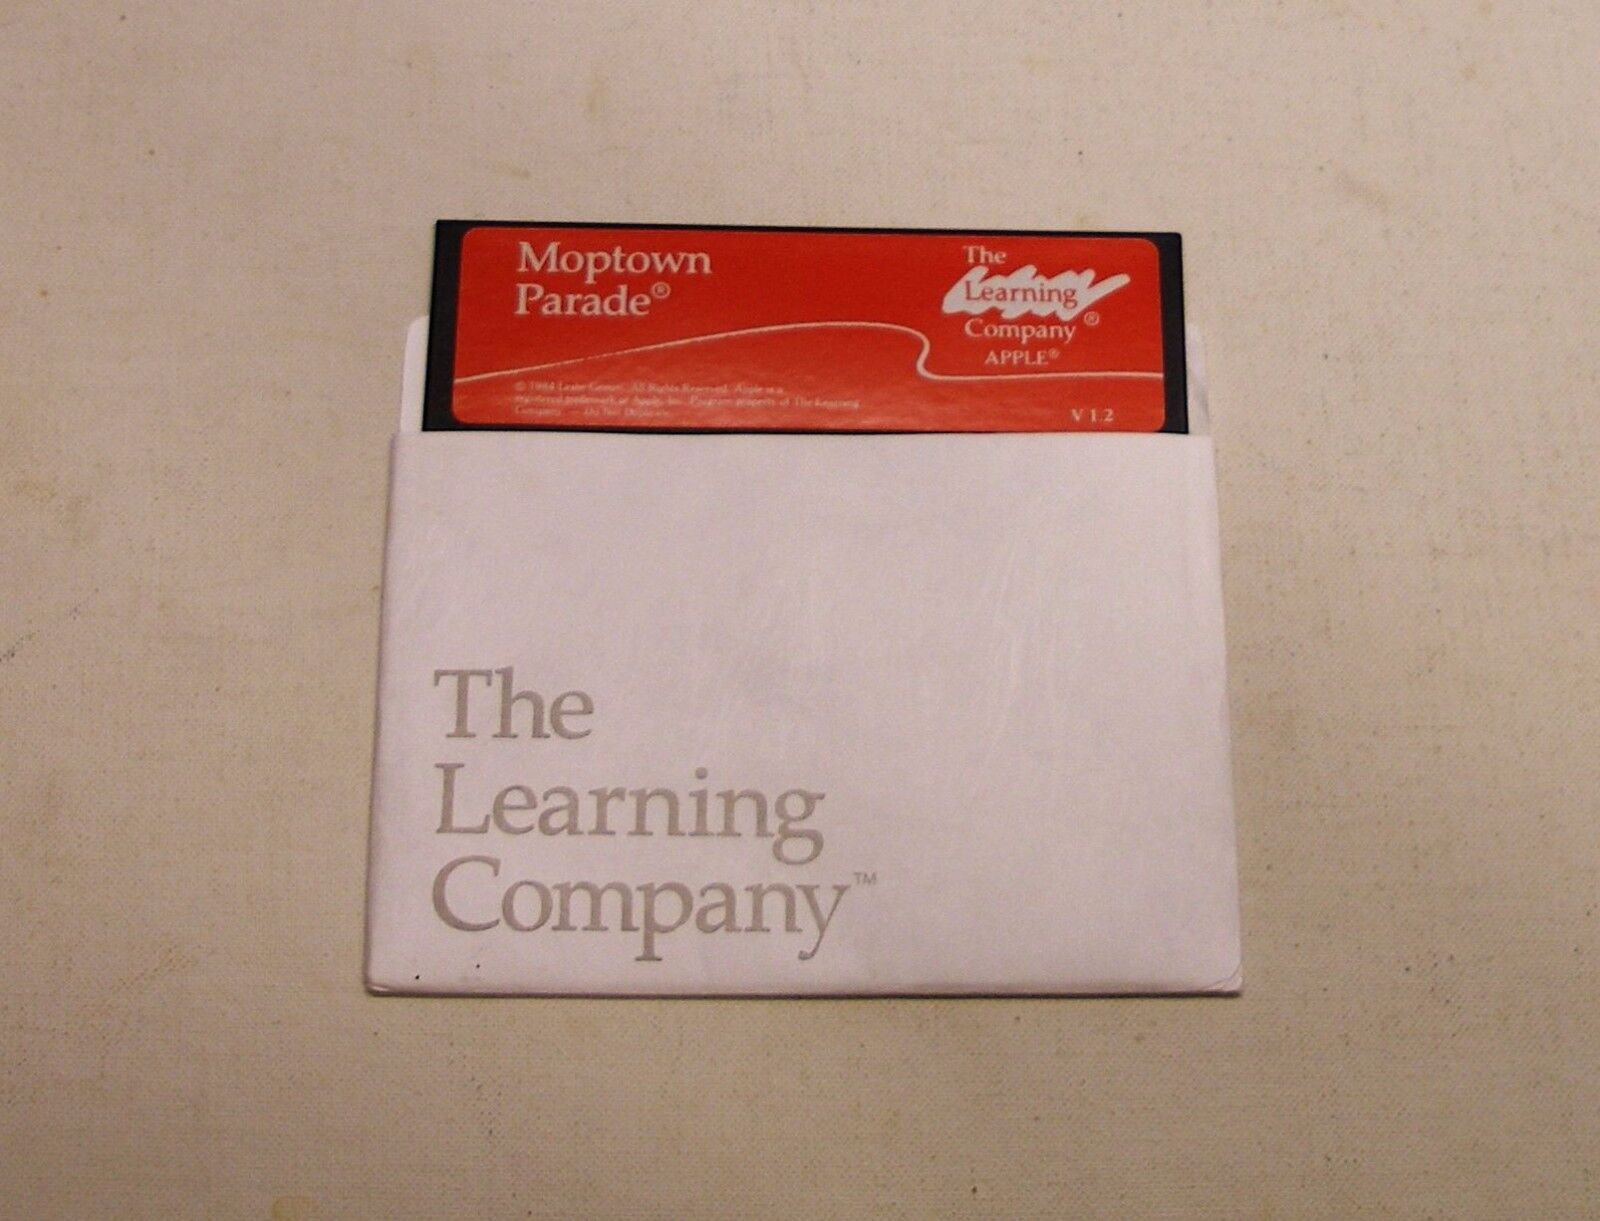 Moptown Parade by Learning Company for the Apple II Plus, Apple IIe, IIc, IIGS